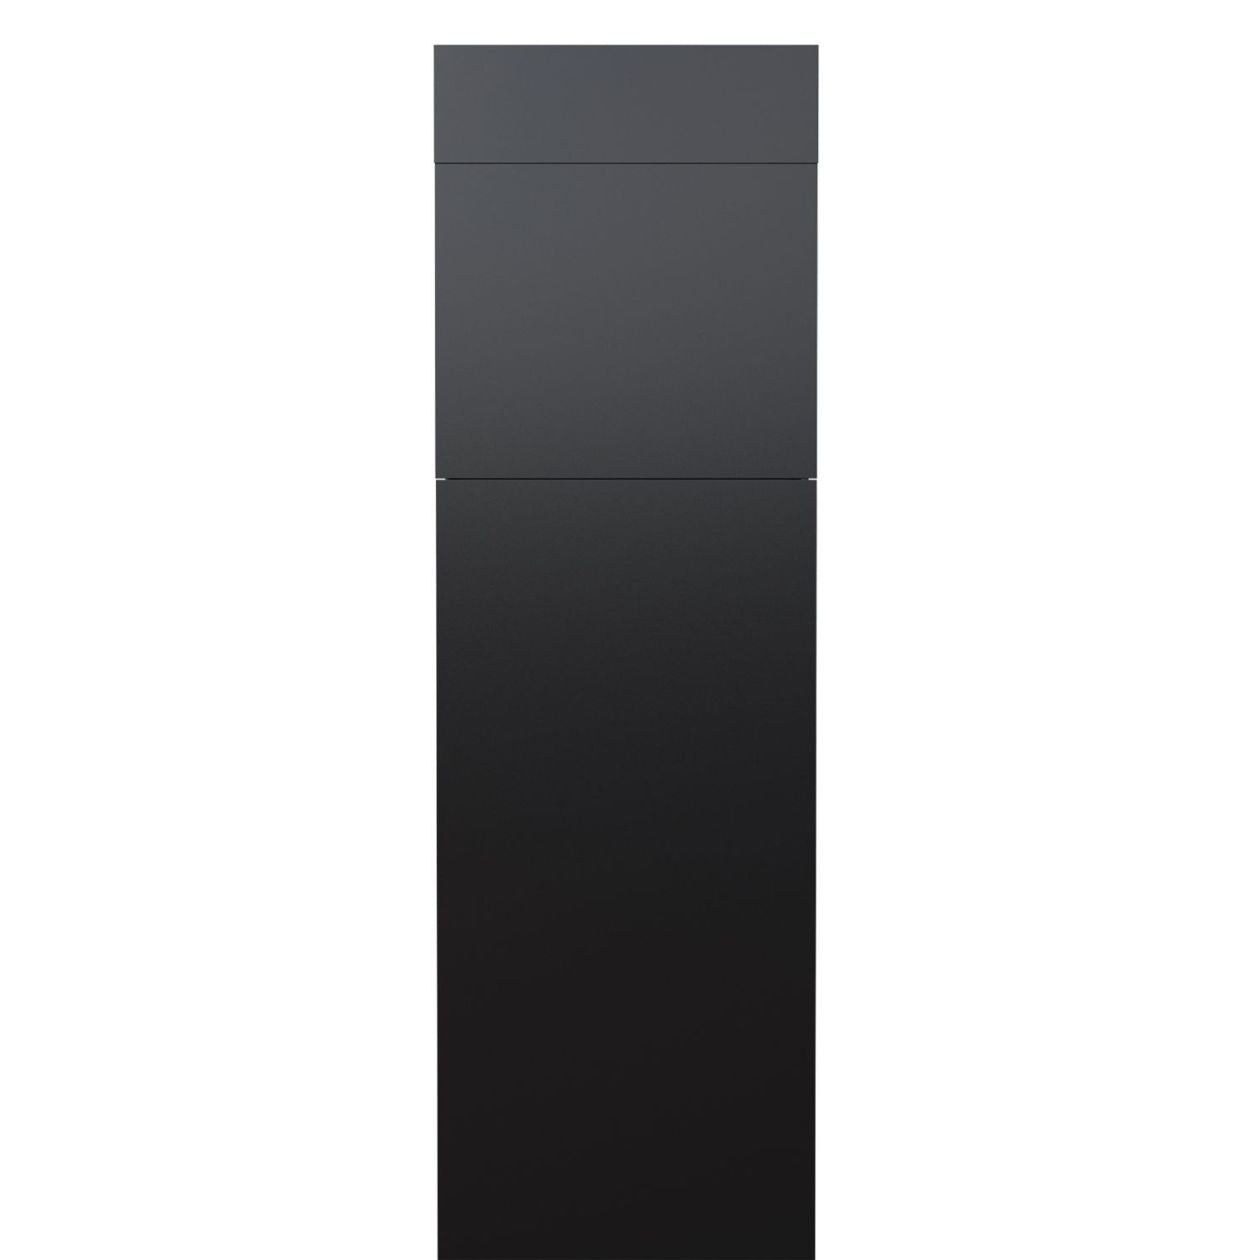 THE BOX by Bravios - Modern stand-alone black mailbox